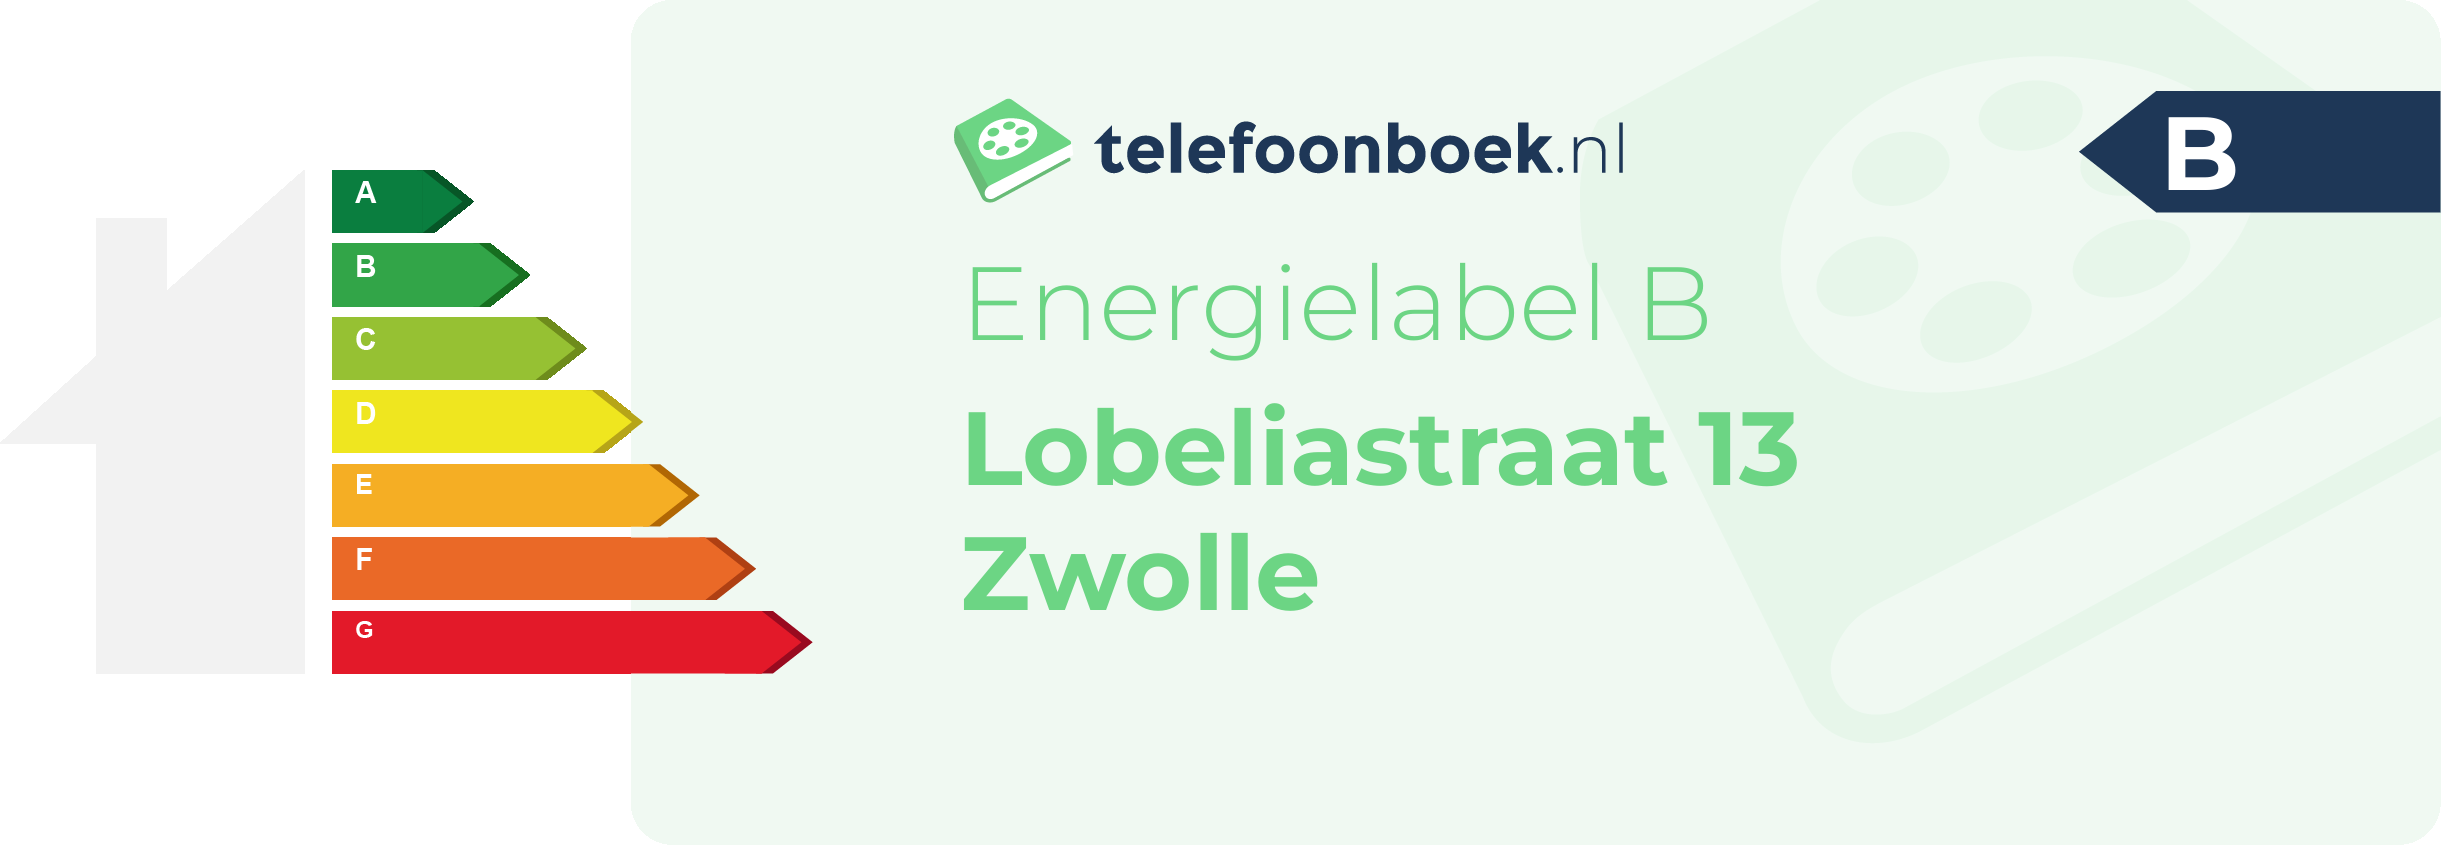 Energielabel Lobeliastraat 13 Zwolle